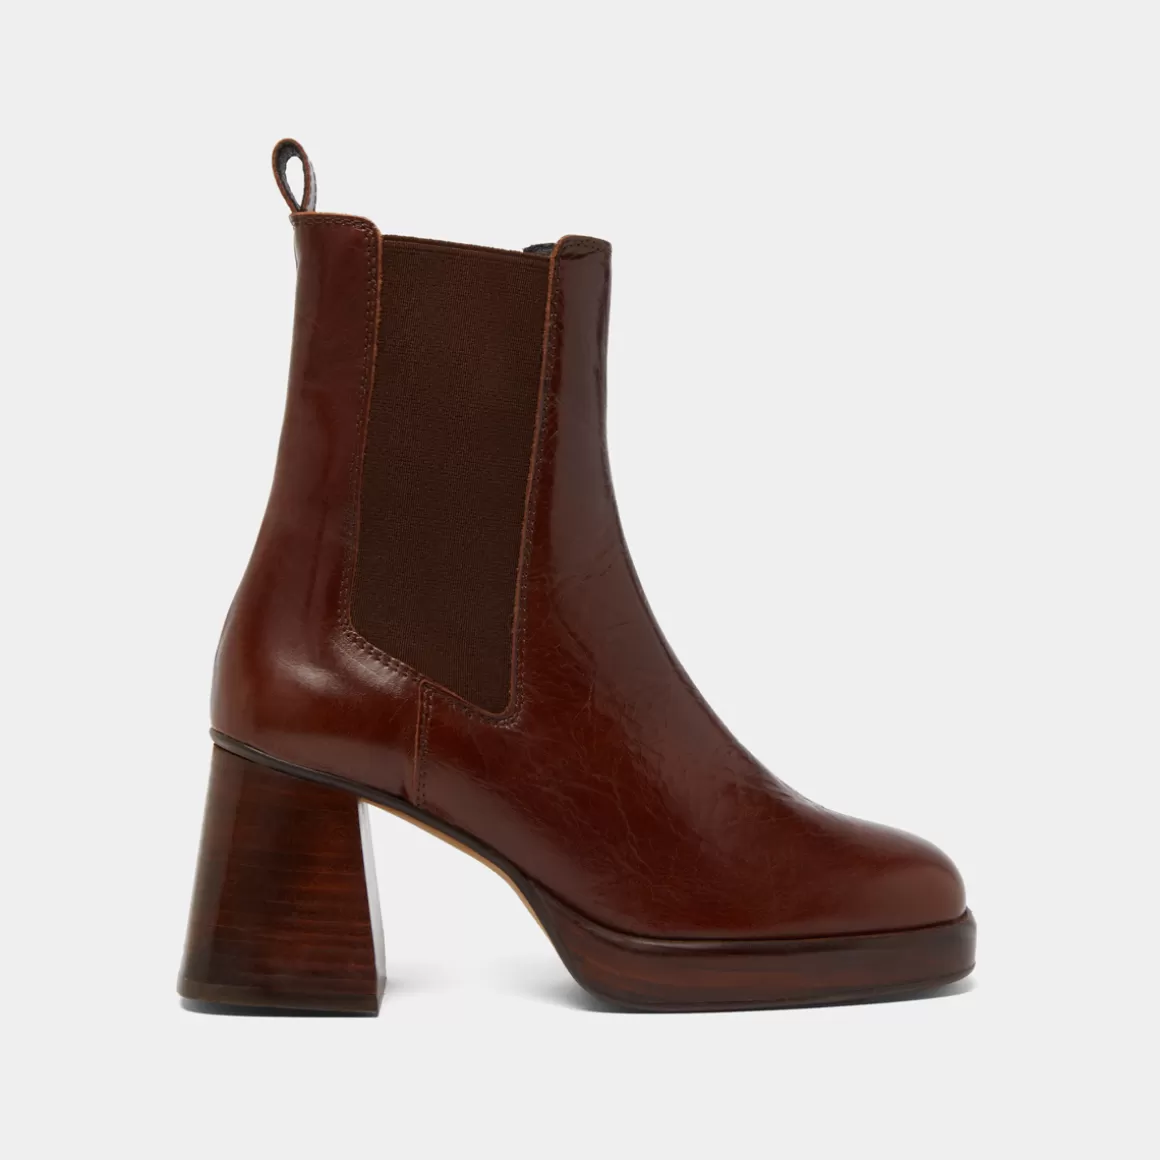 Square toe and elastic boots<Jonak Cheap